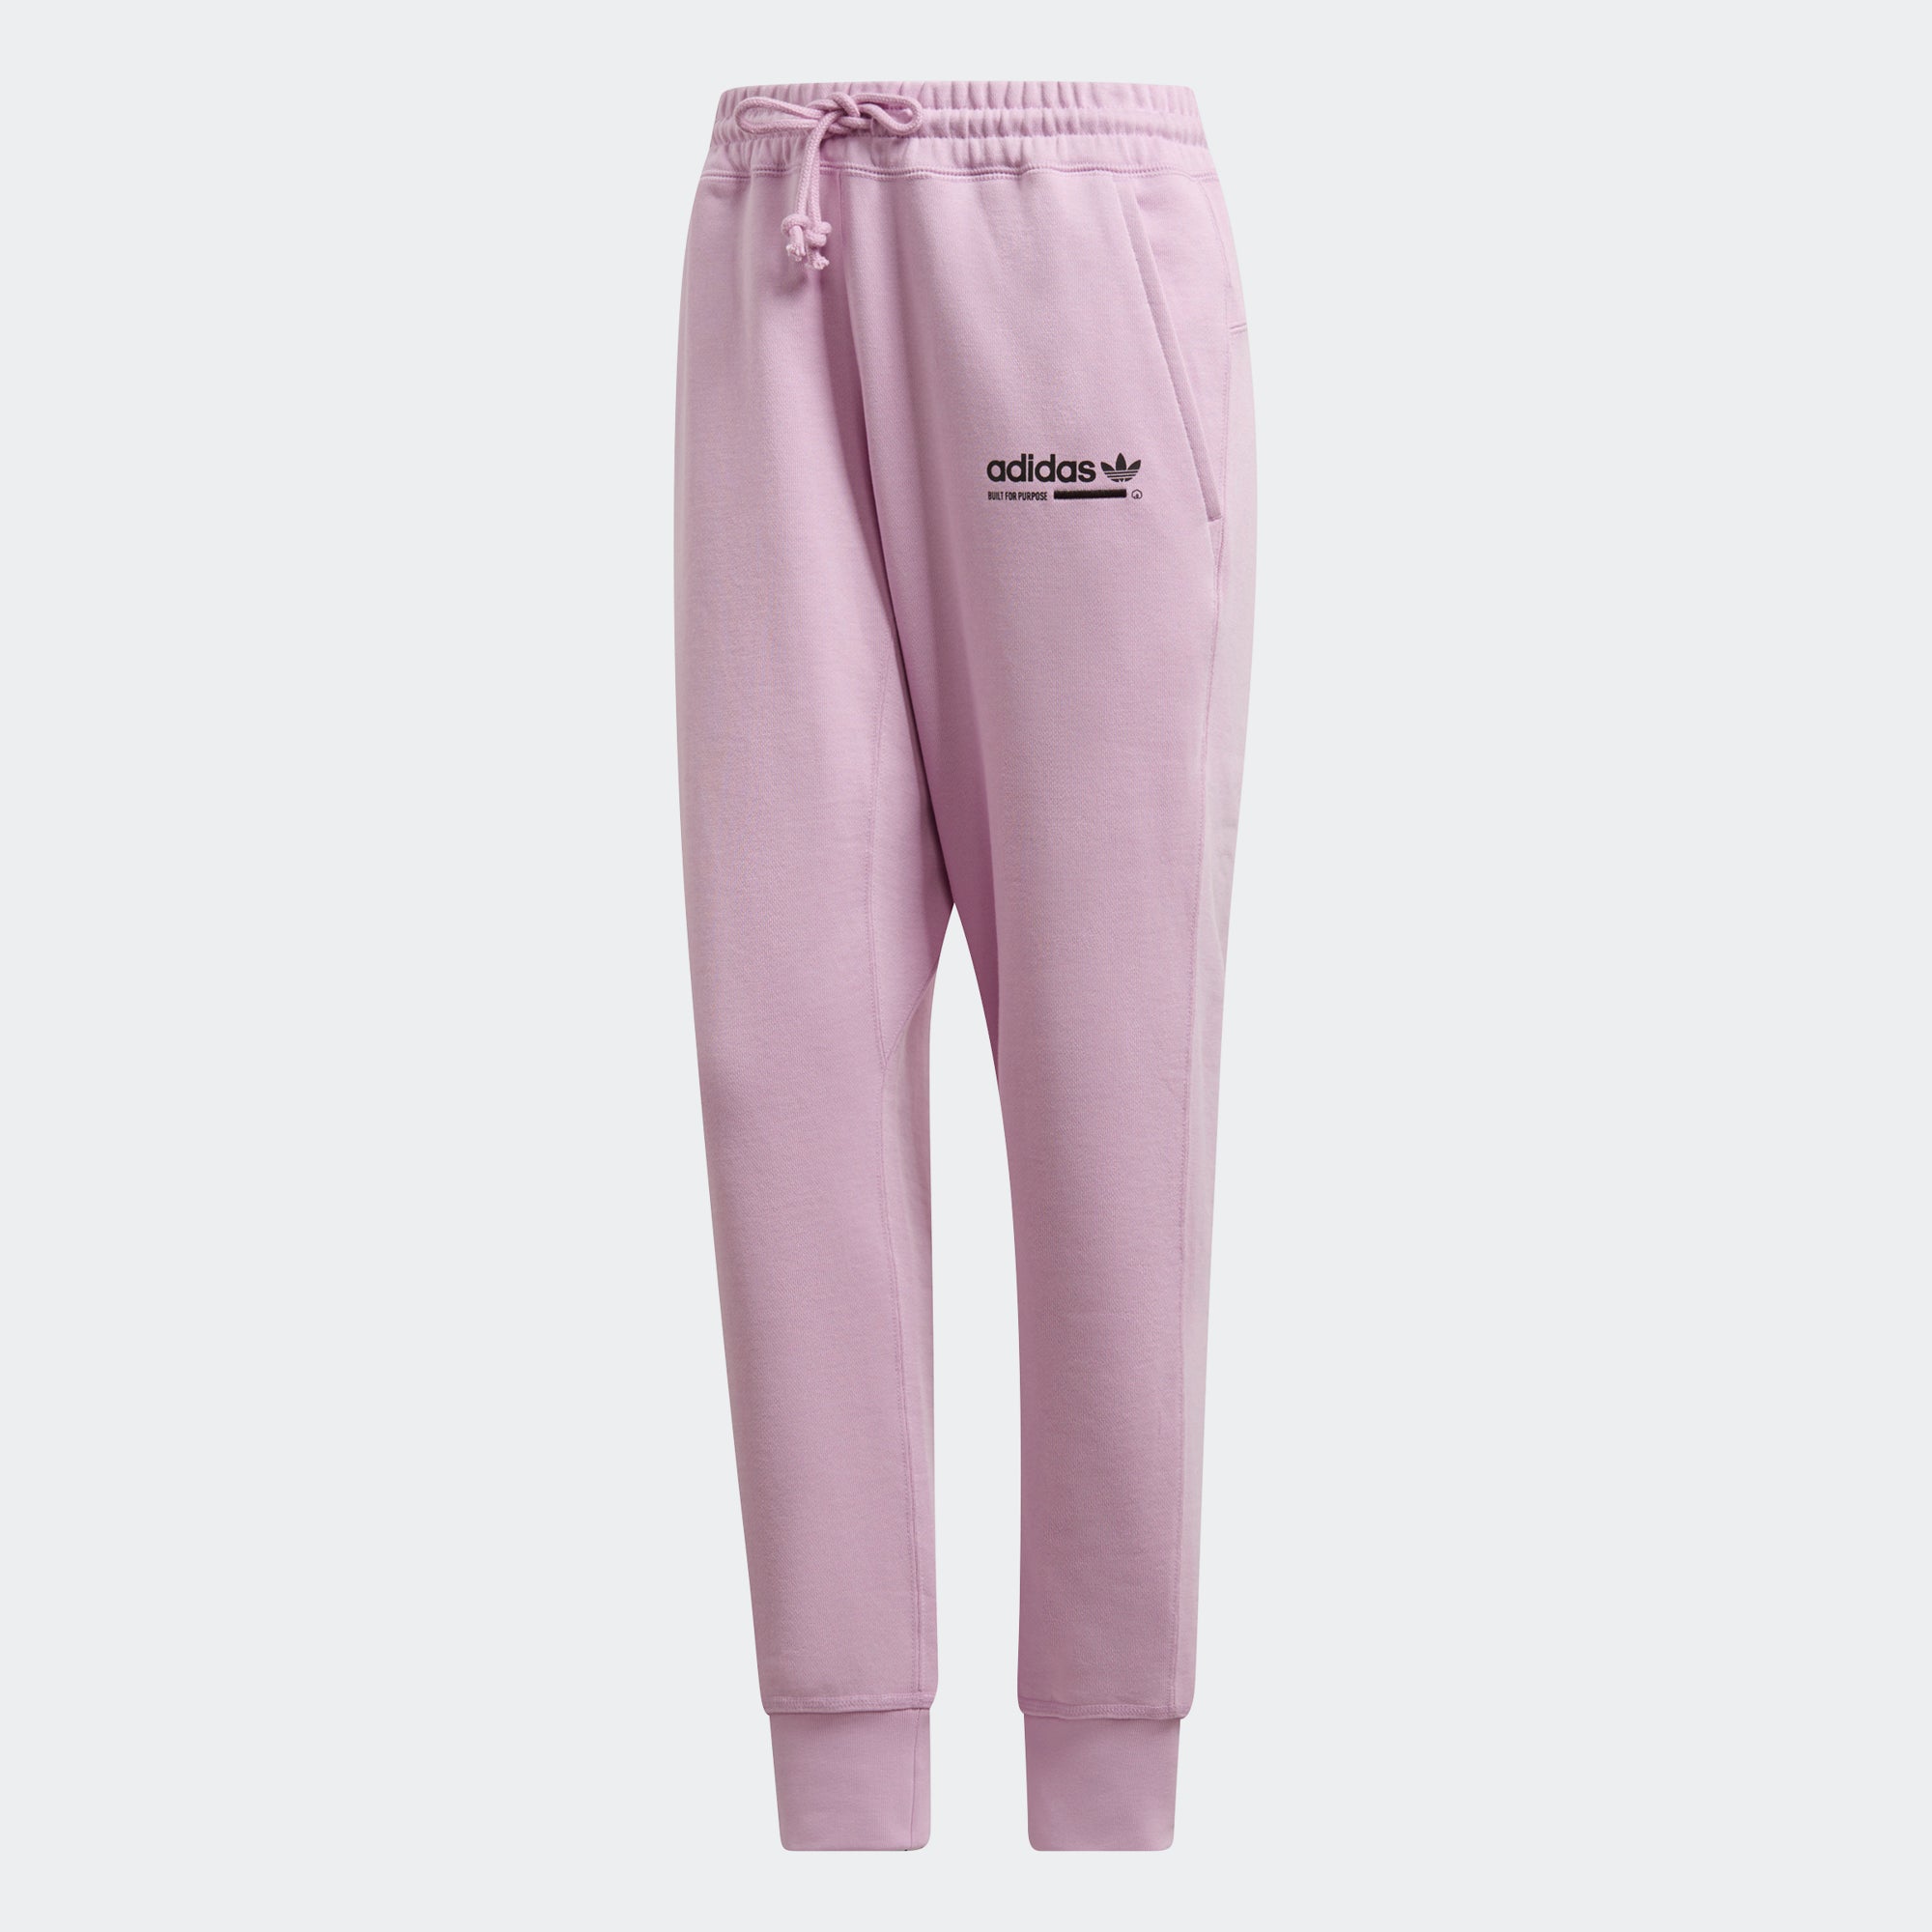 adidas lilac joggers